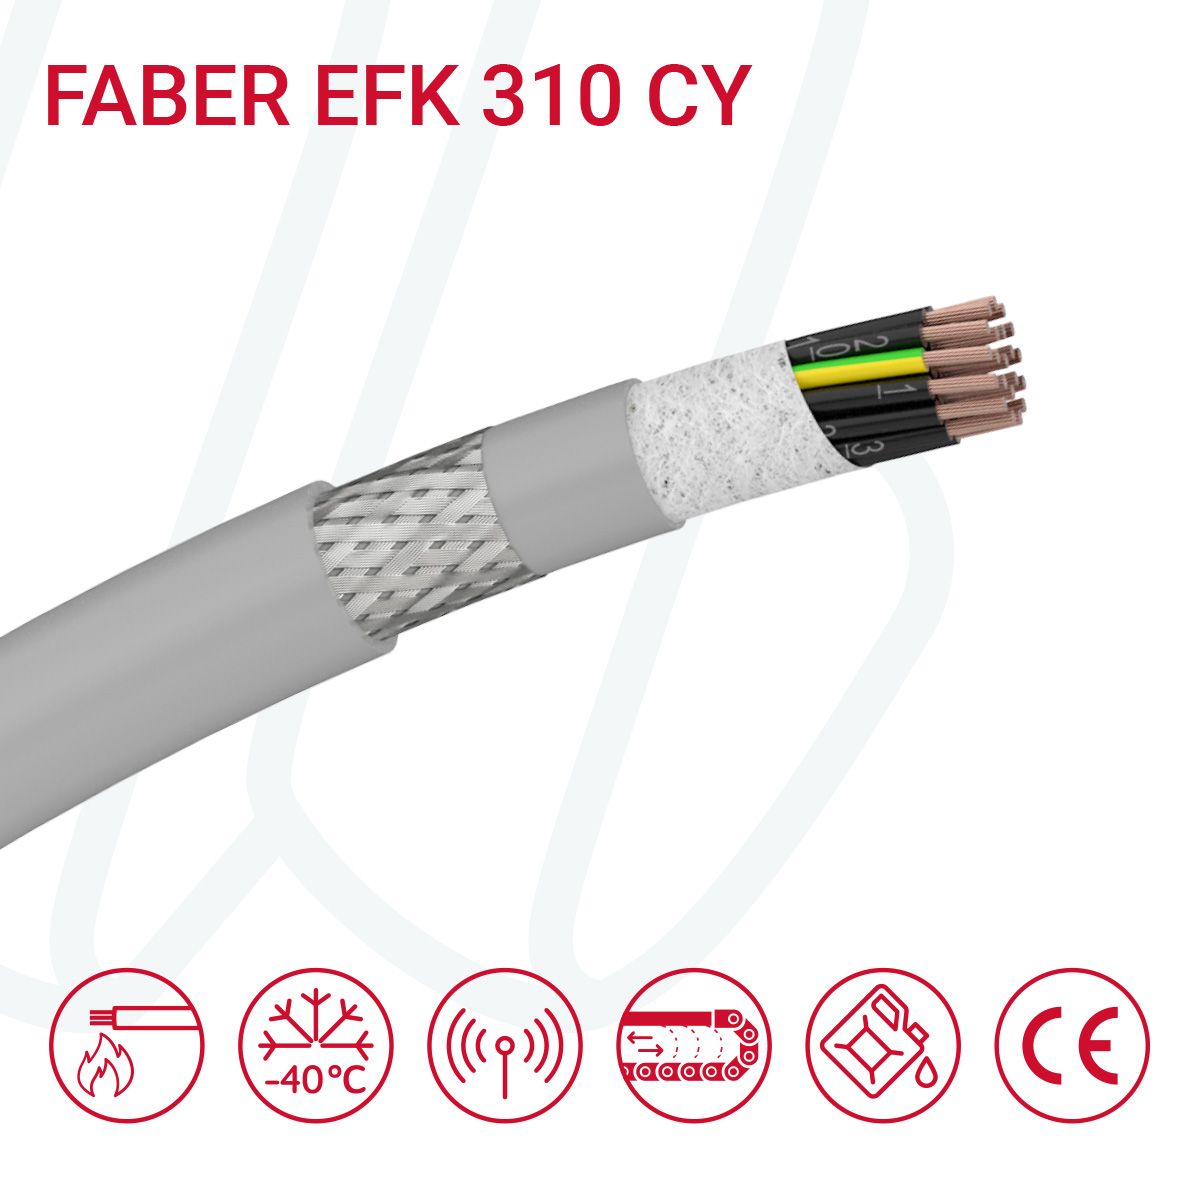 Кабель FABER EFK 310 CY 10G1 cUL сірий, 10, 1.0